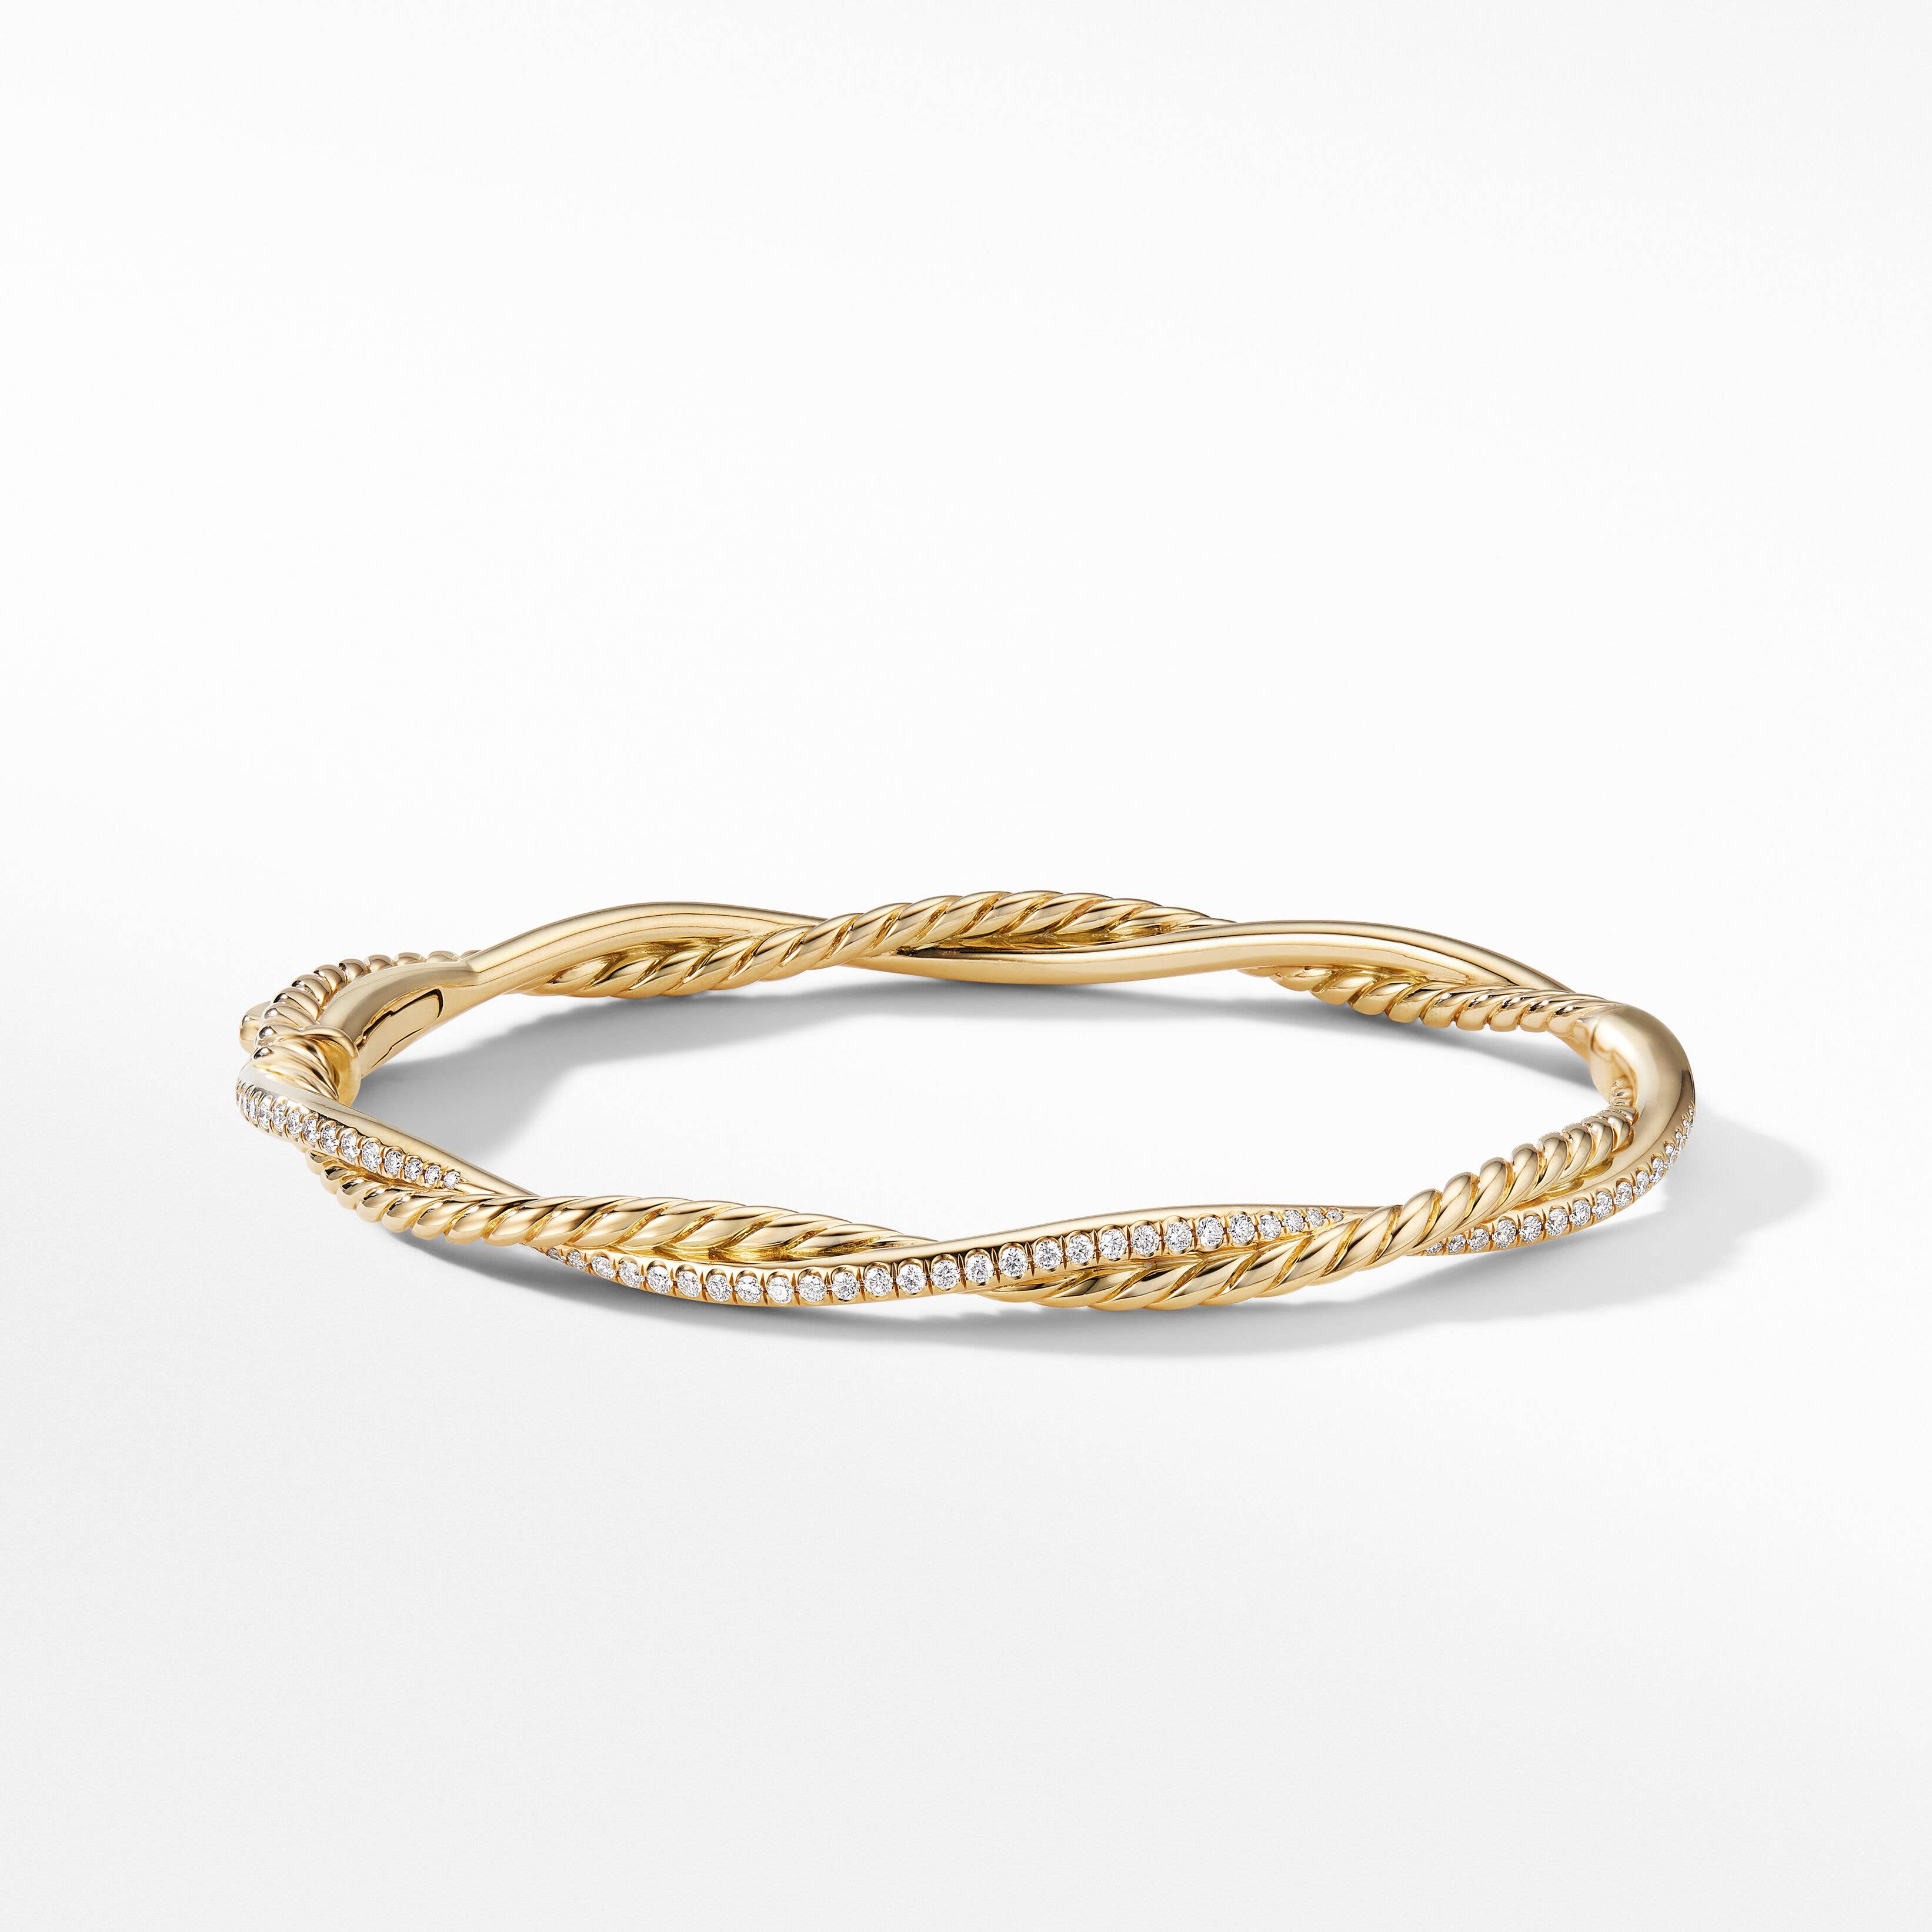 Petite Infinity Bracelet in 18K Yellow Gold with Pavé Diamonds